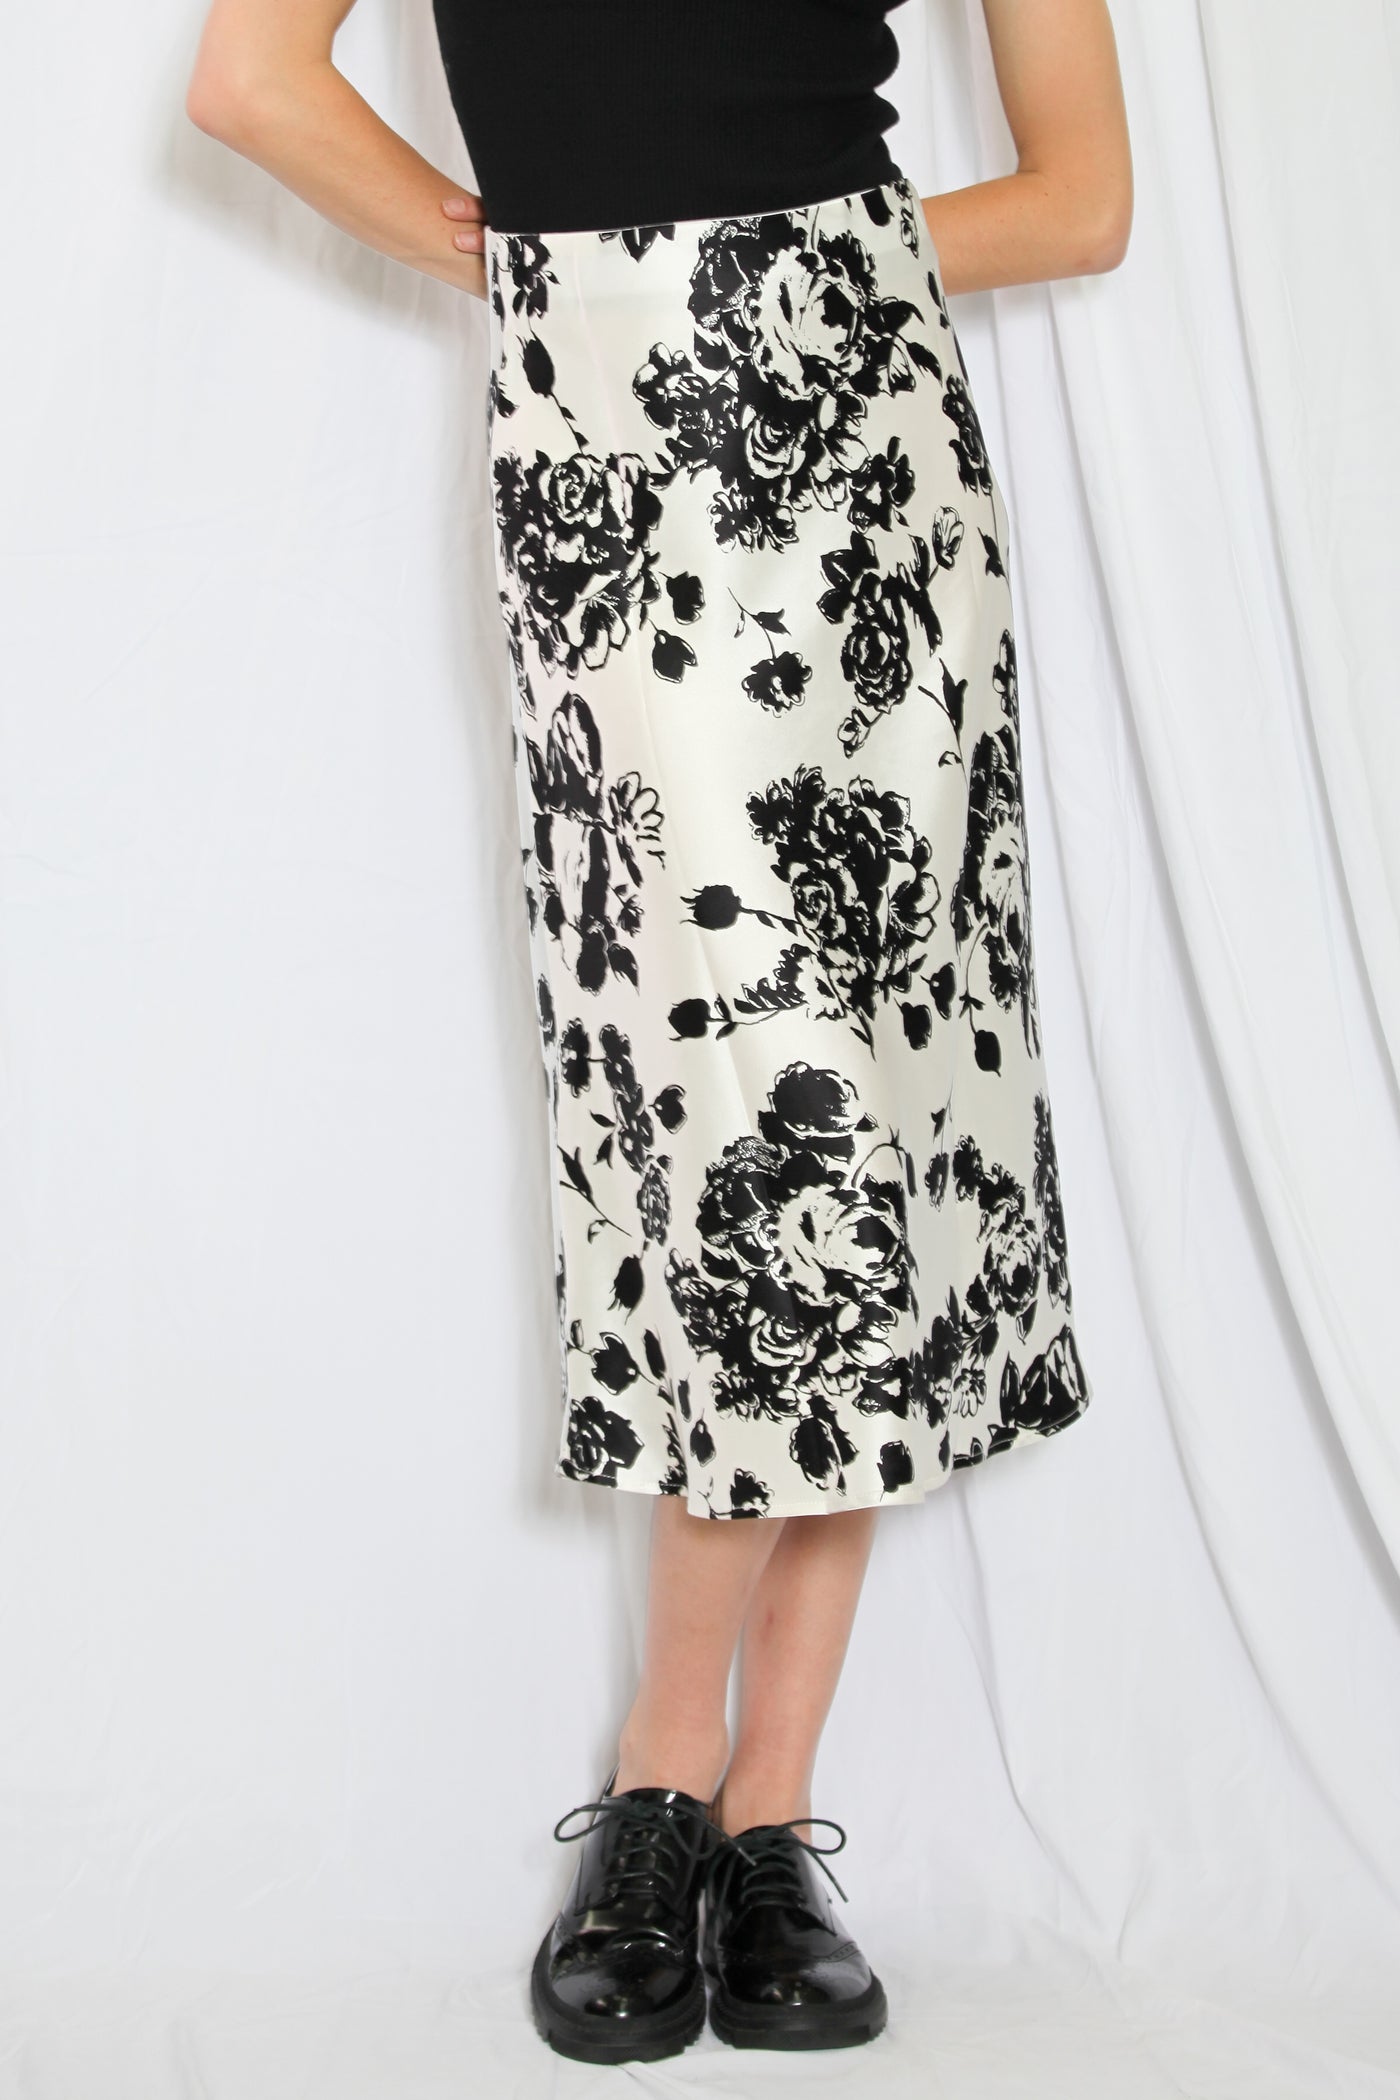 Silk Printed Black White Floral Midi Skirt